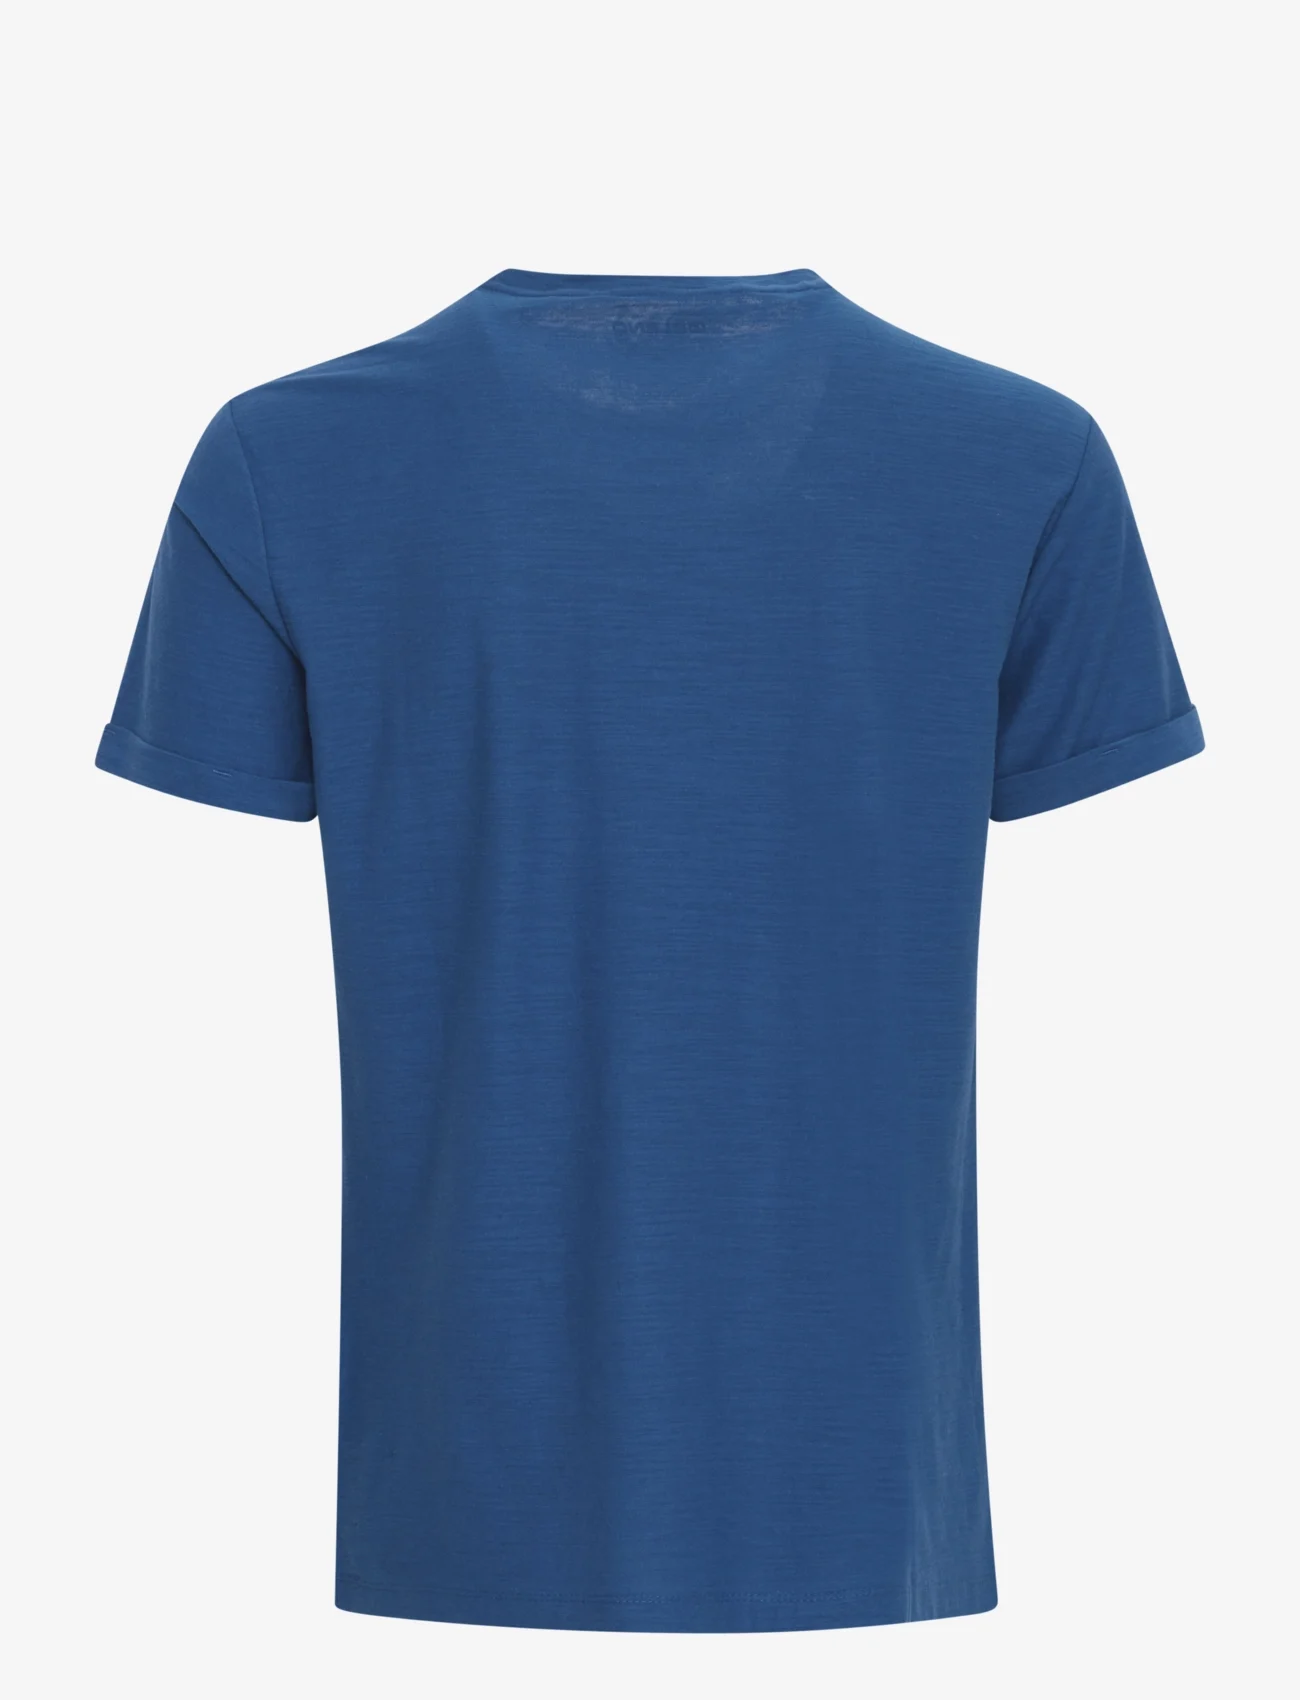 Blend - Tee - short-sleeved t-shirts - navy peony - 1